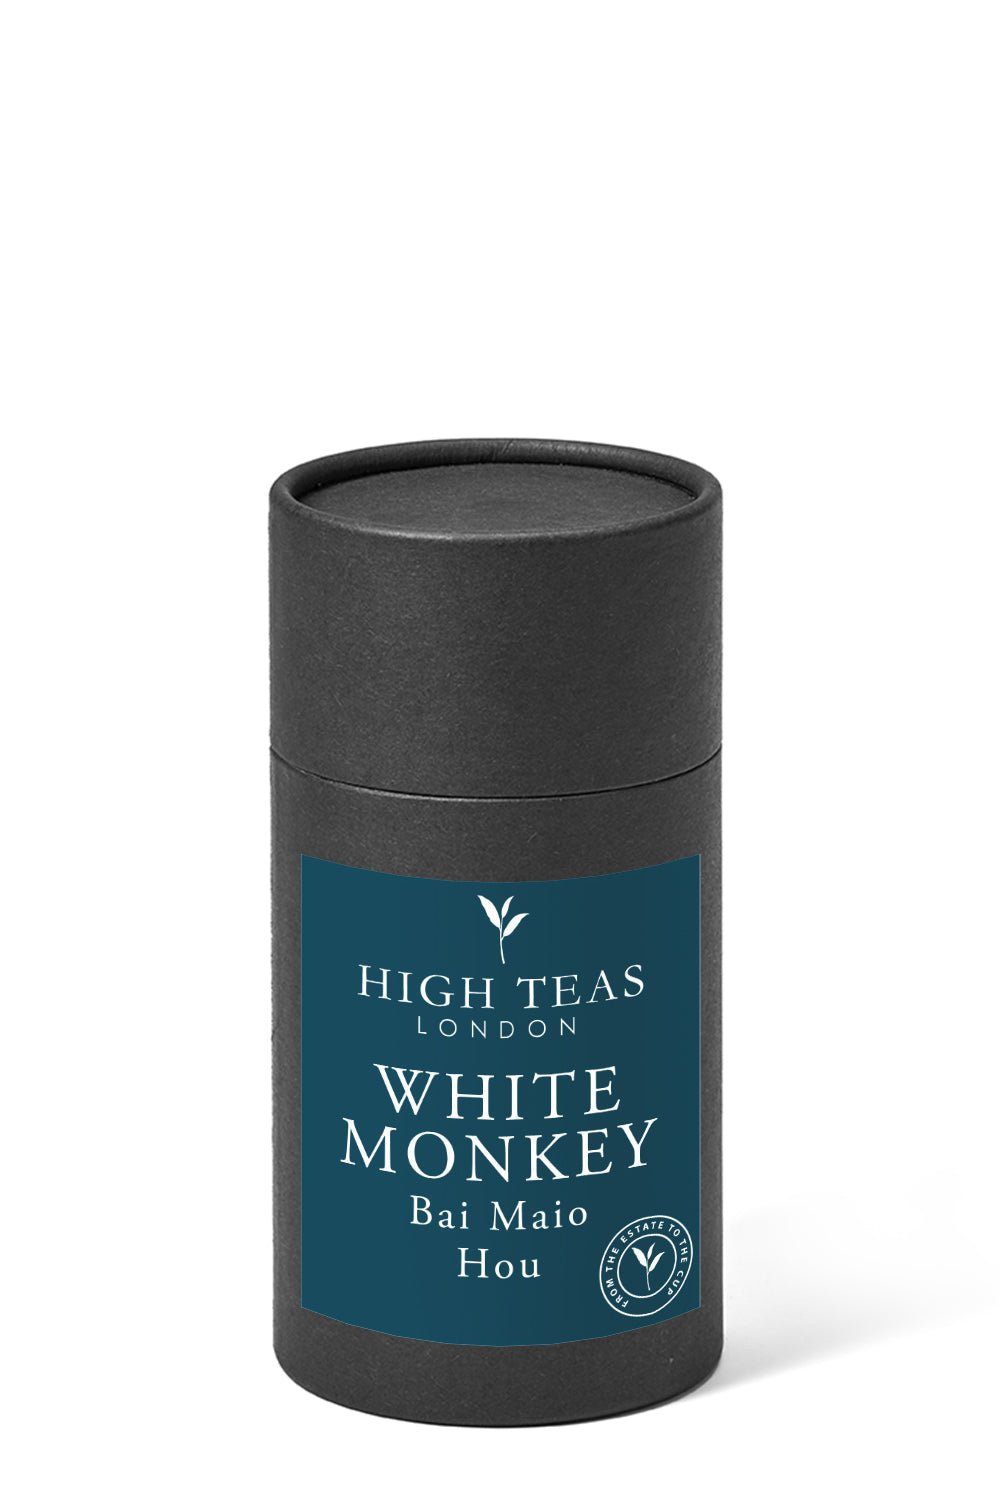 Bai Maio Hou - White Monkey-60g gift-Loose Leaf Tea-High Teas